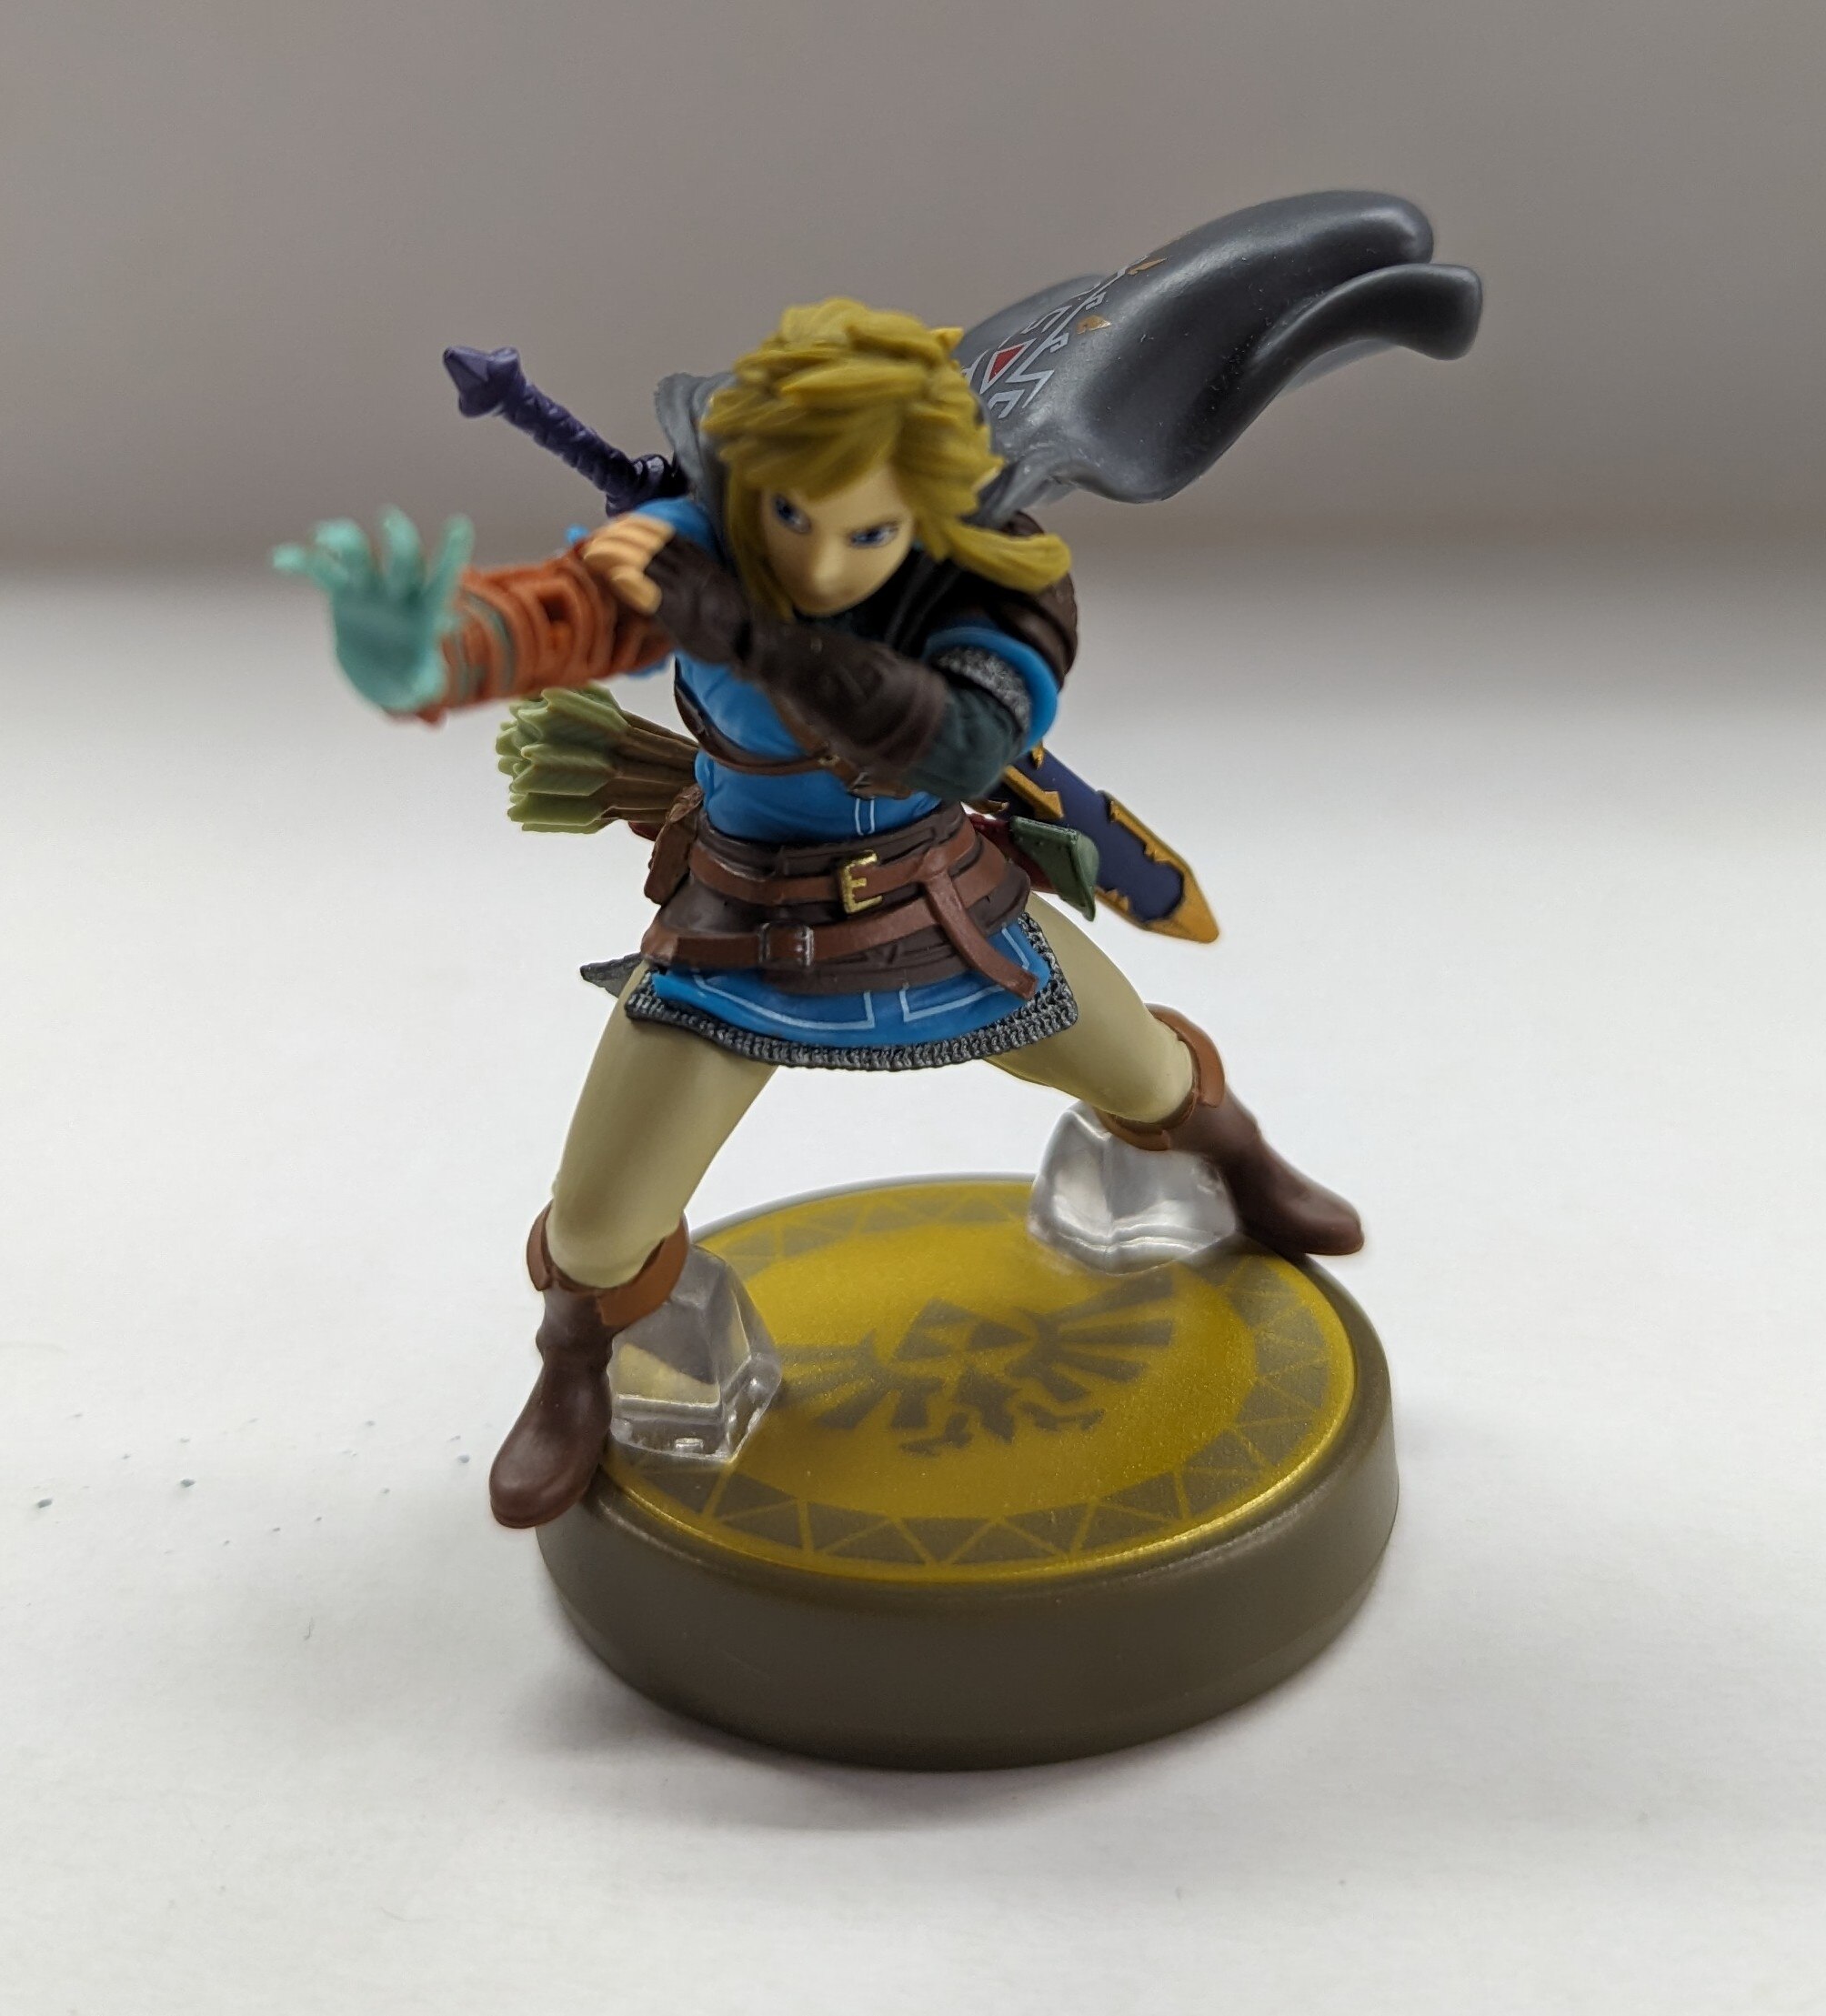 Nintendo Amiibo The Legend Of Zelda Link Tears Of The Kingdom